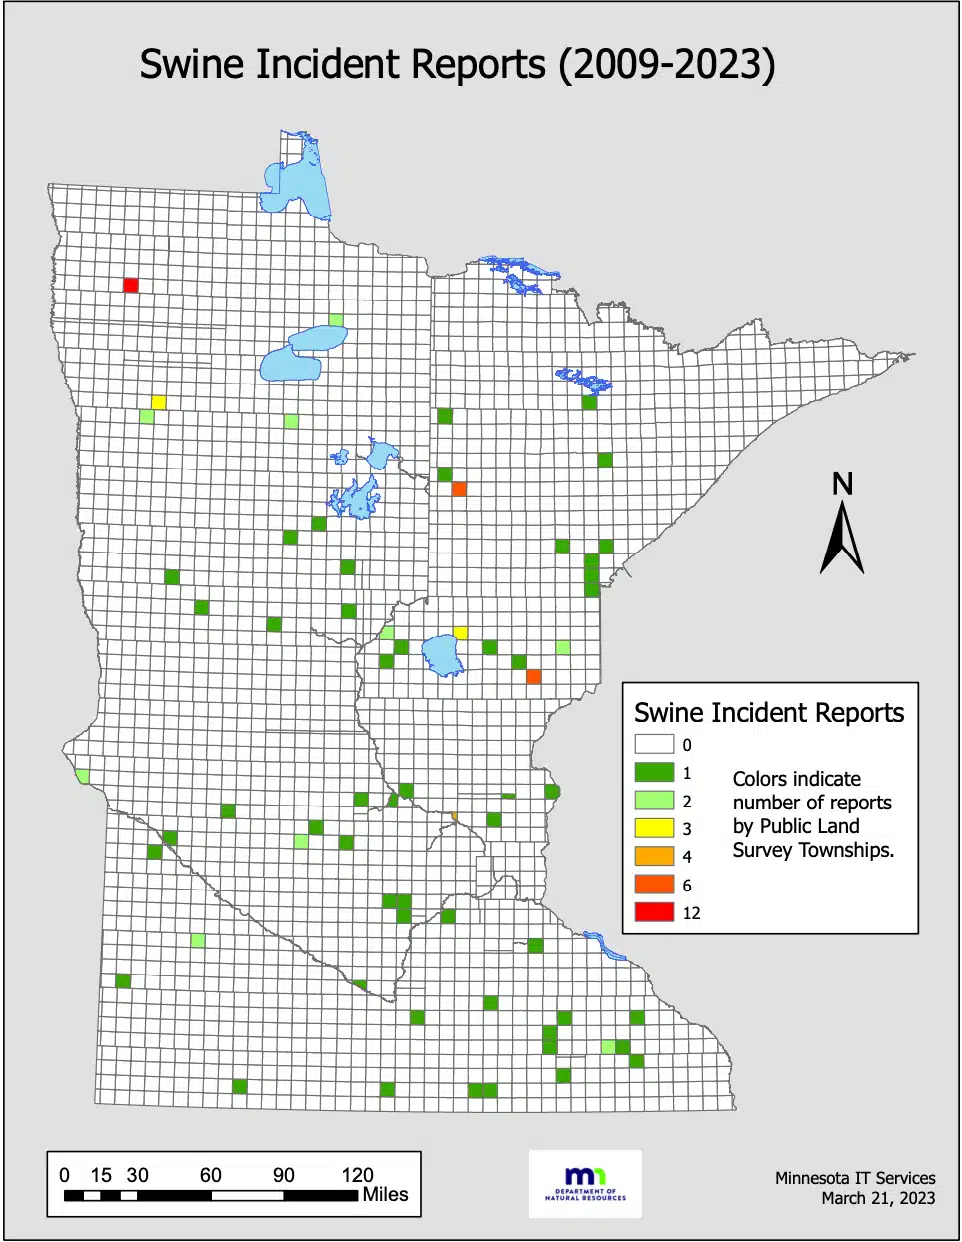 Swine Incident Reports in Minnesota 2009-2023